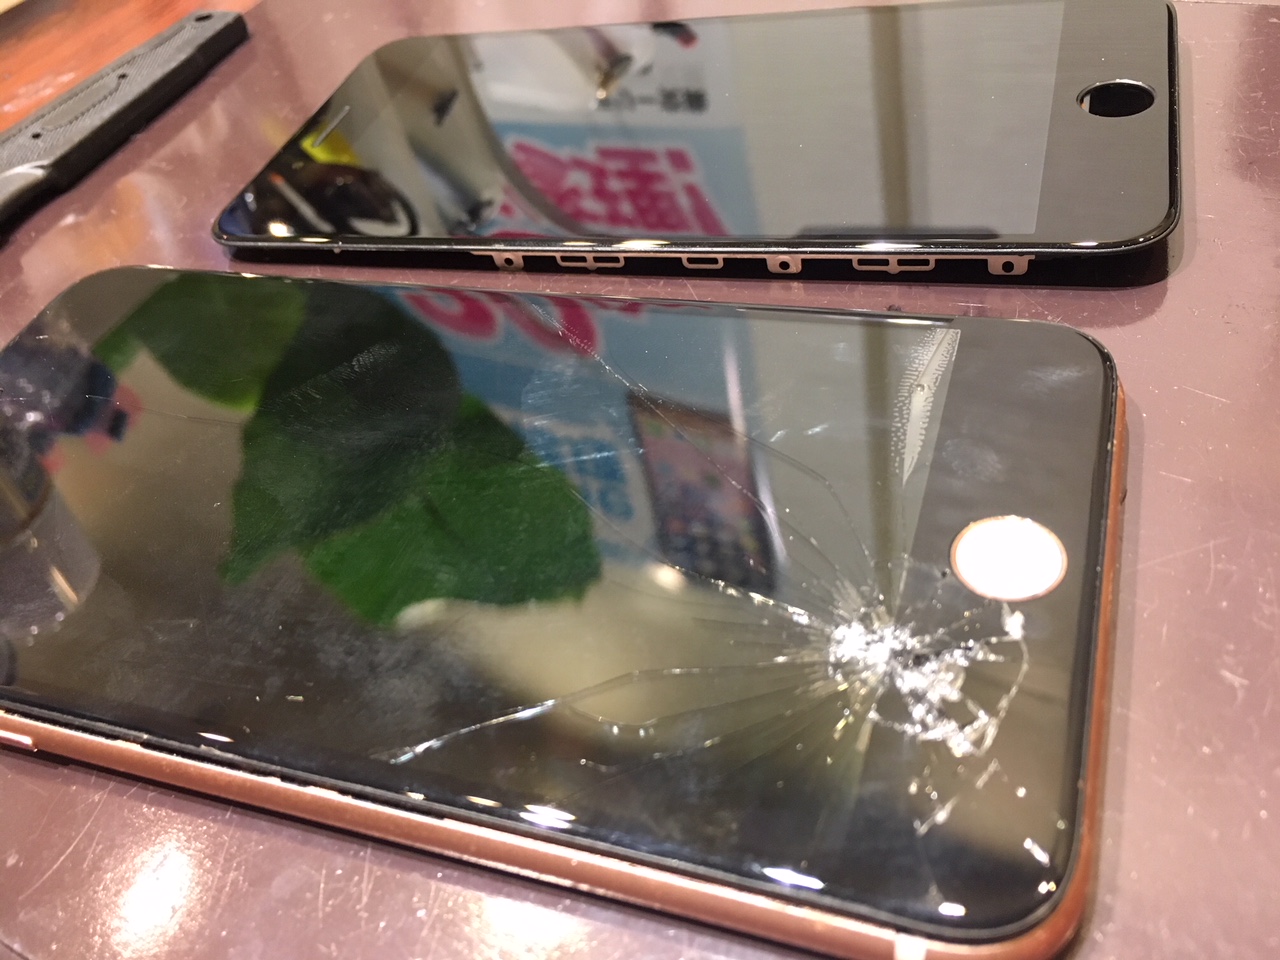 IPHONE８plus液晶破損修理！ガラスが割れて、何も映らなくなったアイフォンも即日30分で修理完了☆中のデータもそのままです！尼崎・伊丹・川西・大阪でiphone即日修理はスマートクールつかしん店🎶☎06-6421-1705[大阪市よりお越しのお客様]